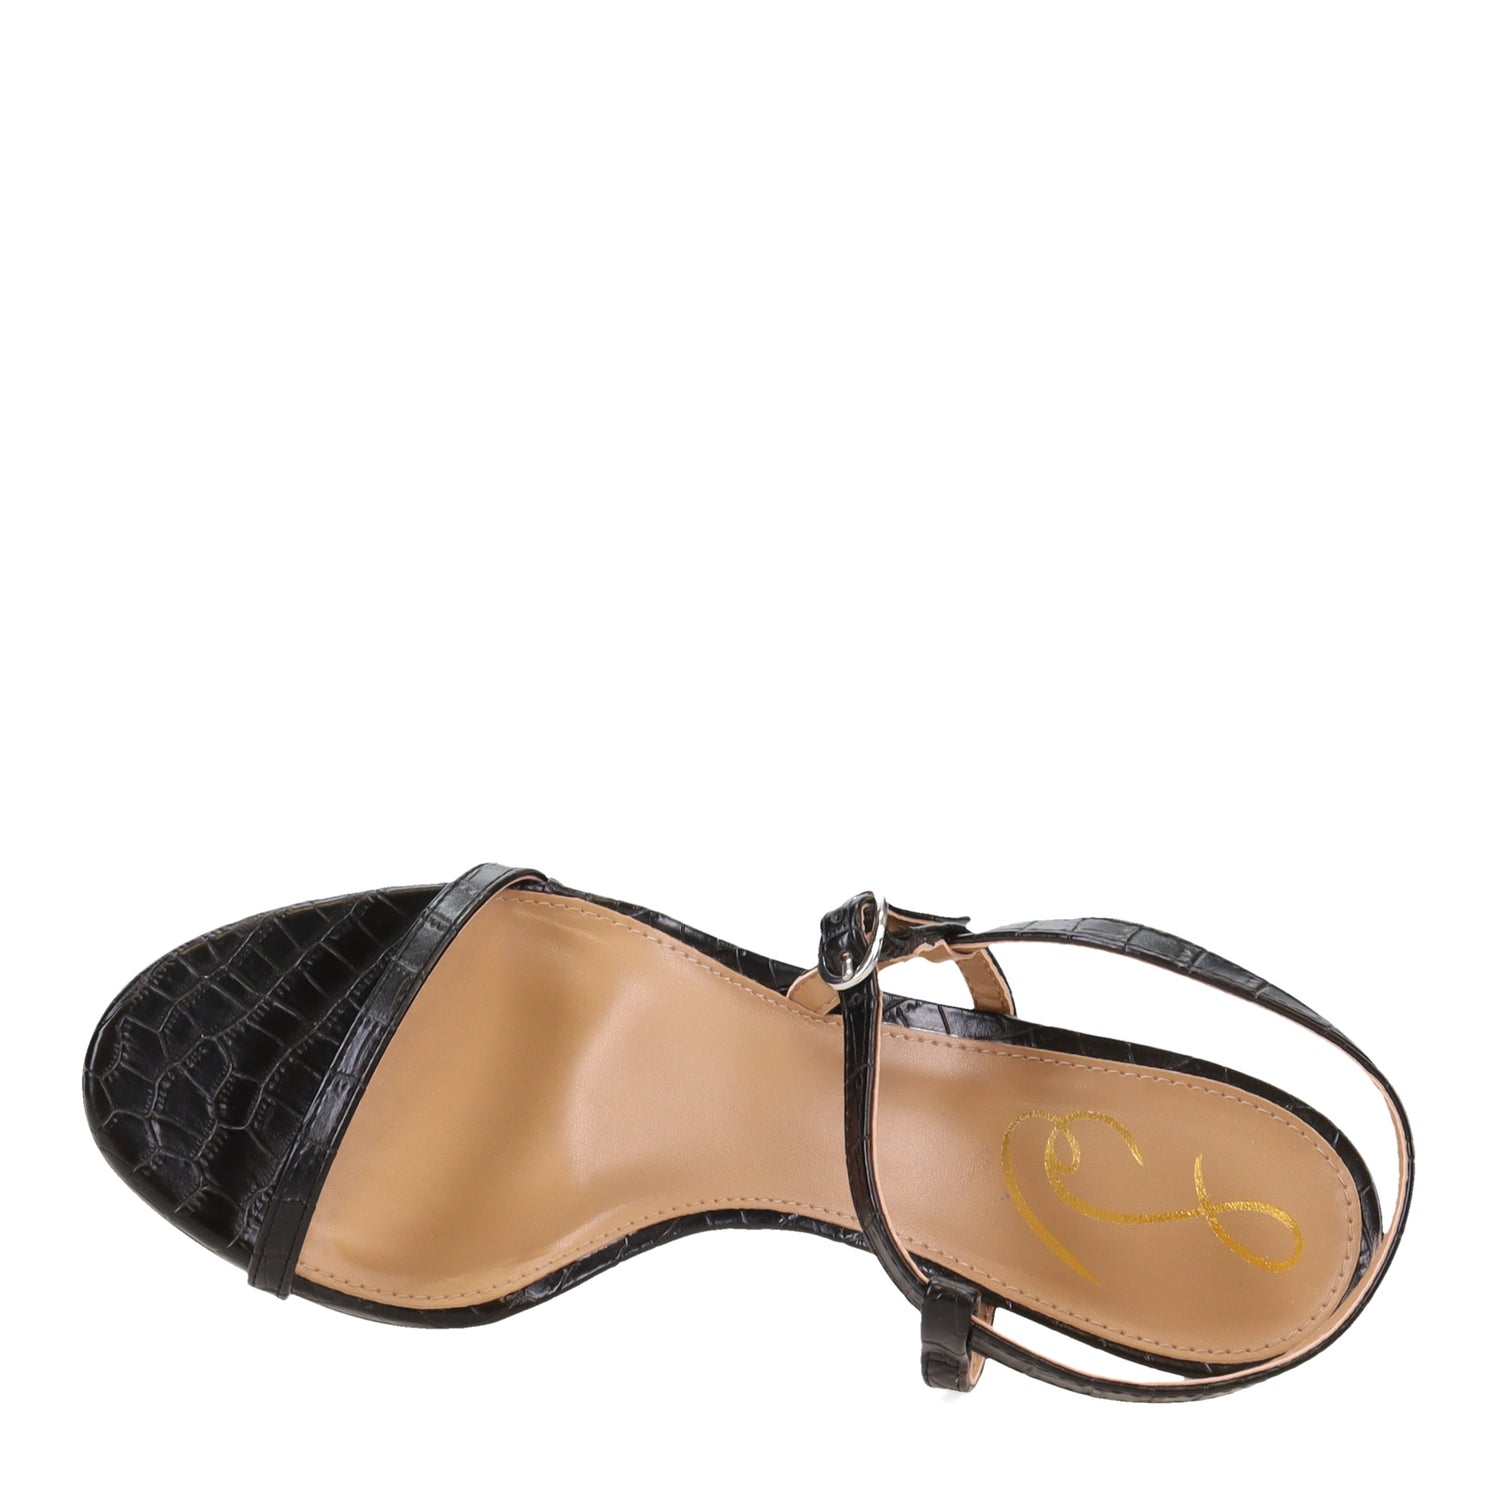 Peltz Shoes  Women's Sam Edelman Doran Sandal BLACK H3135L1001